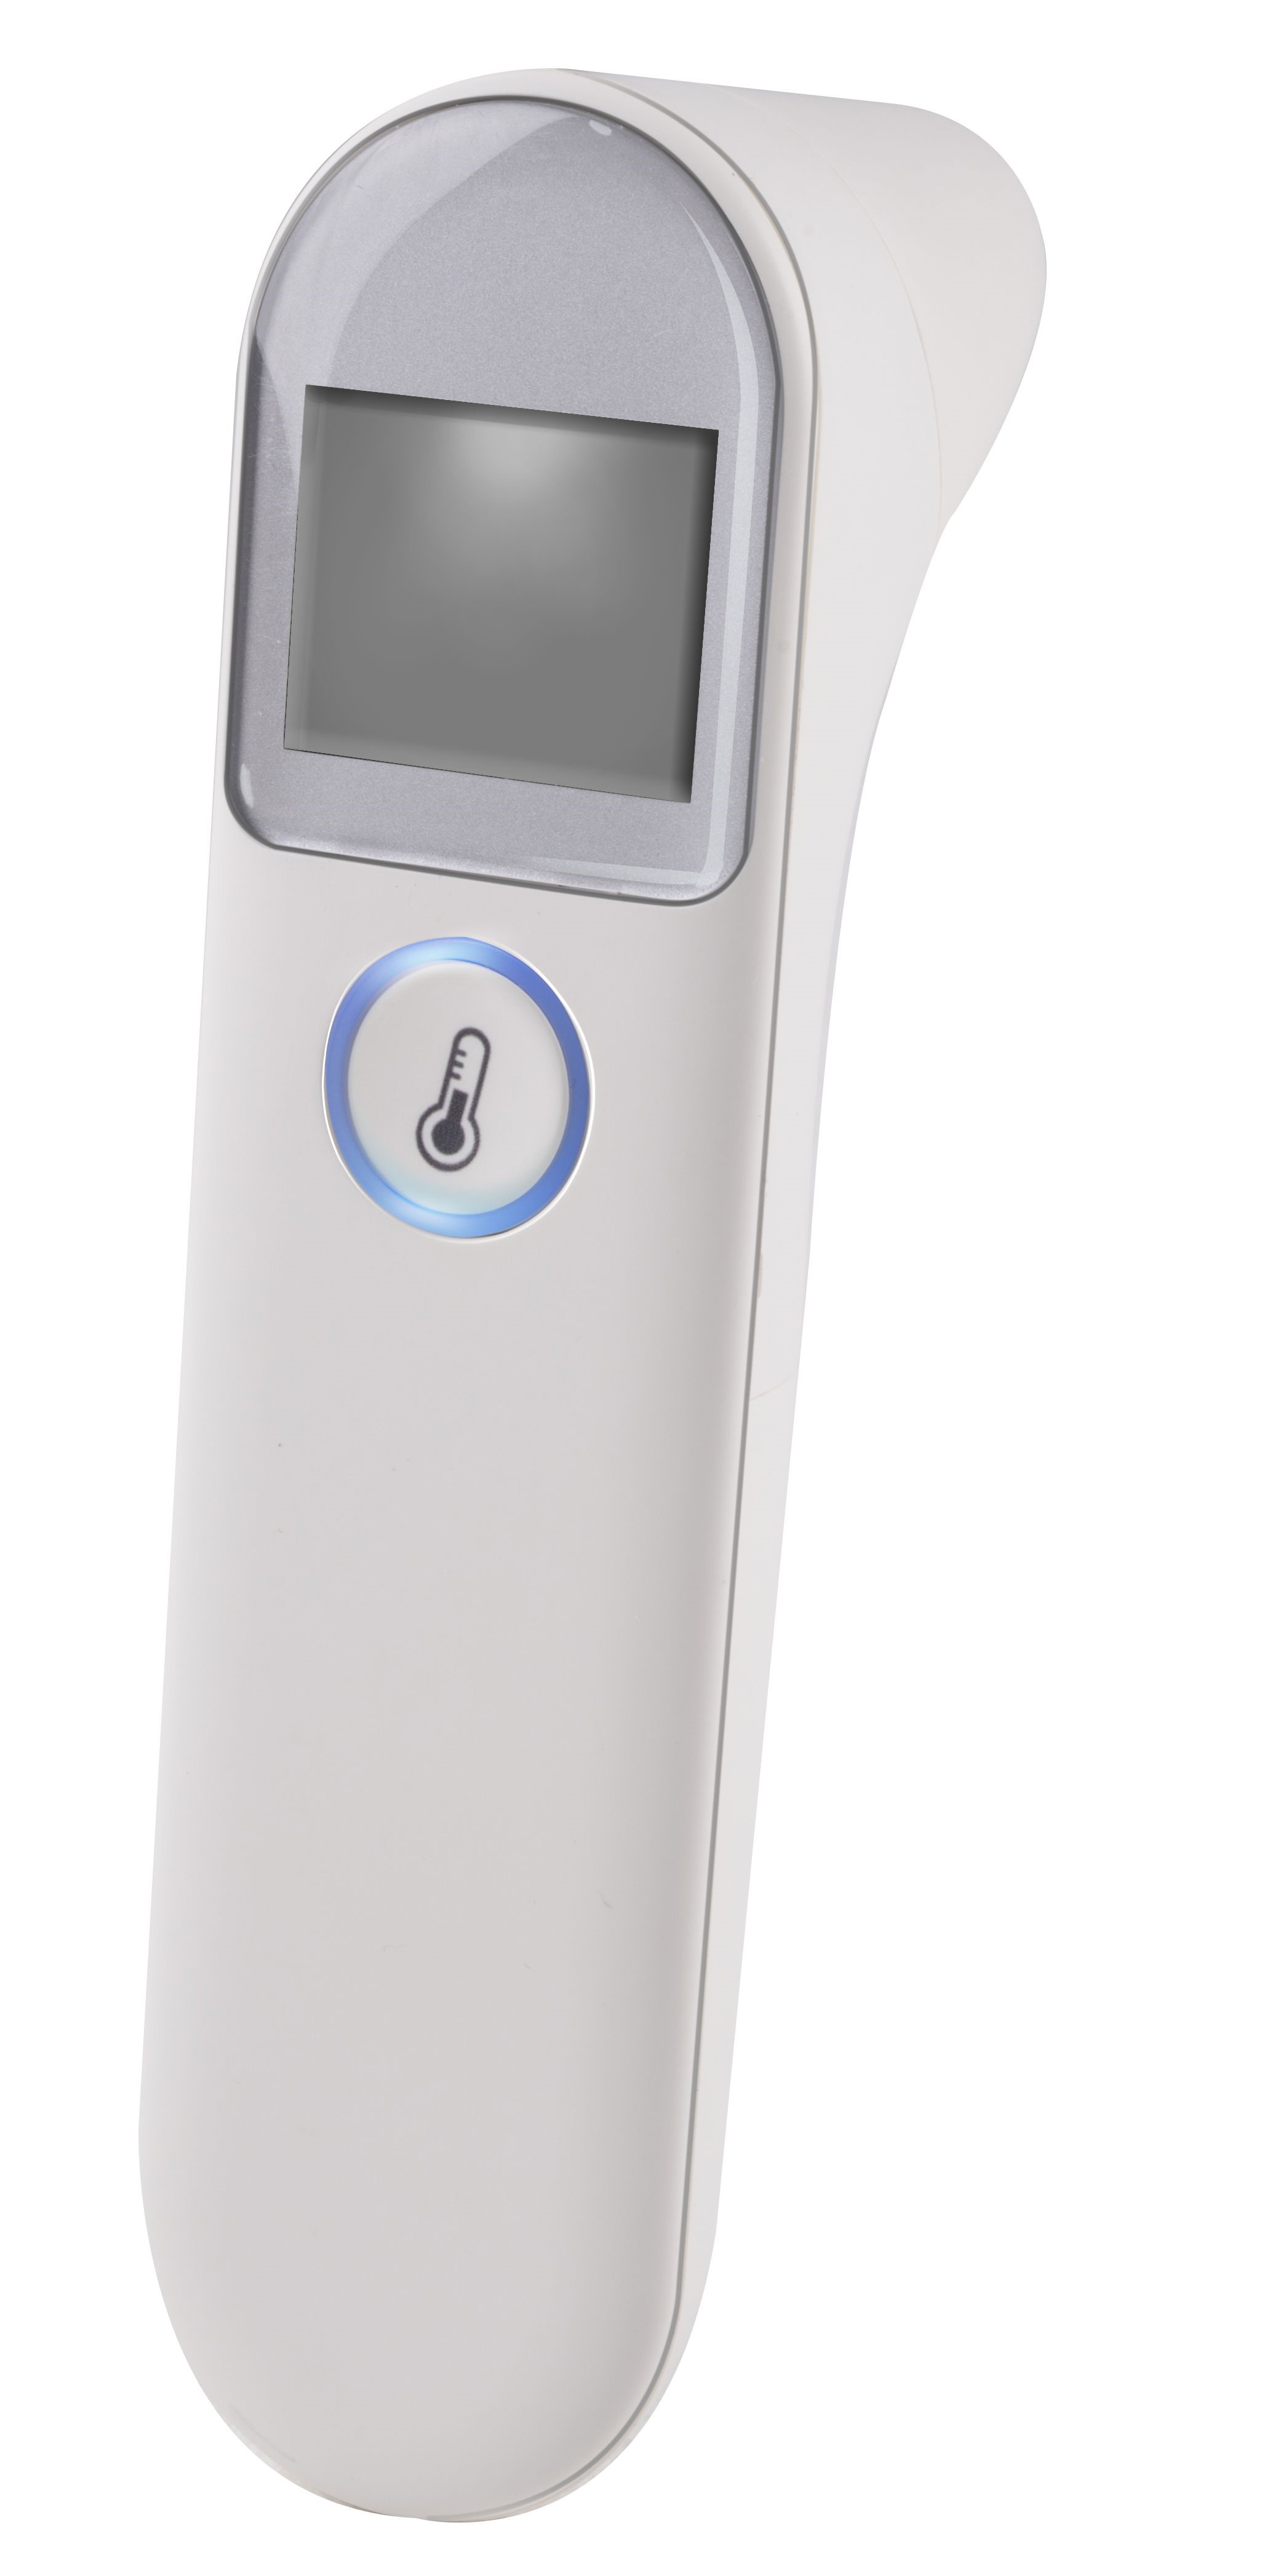 Grundig digitaler Infrarot Fieberthermometer, Messgerät Thermometer Fiebermesser